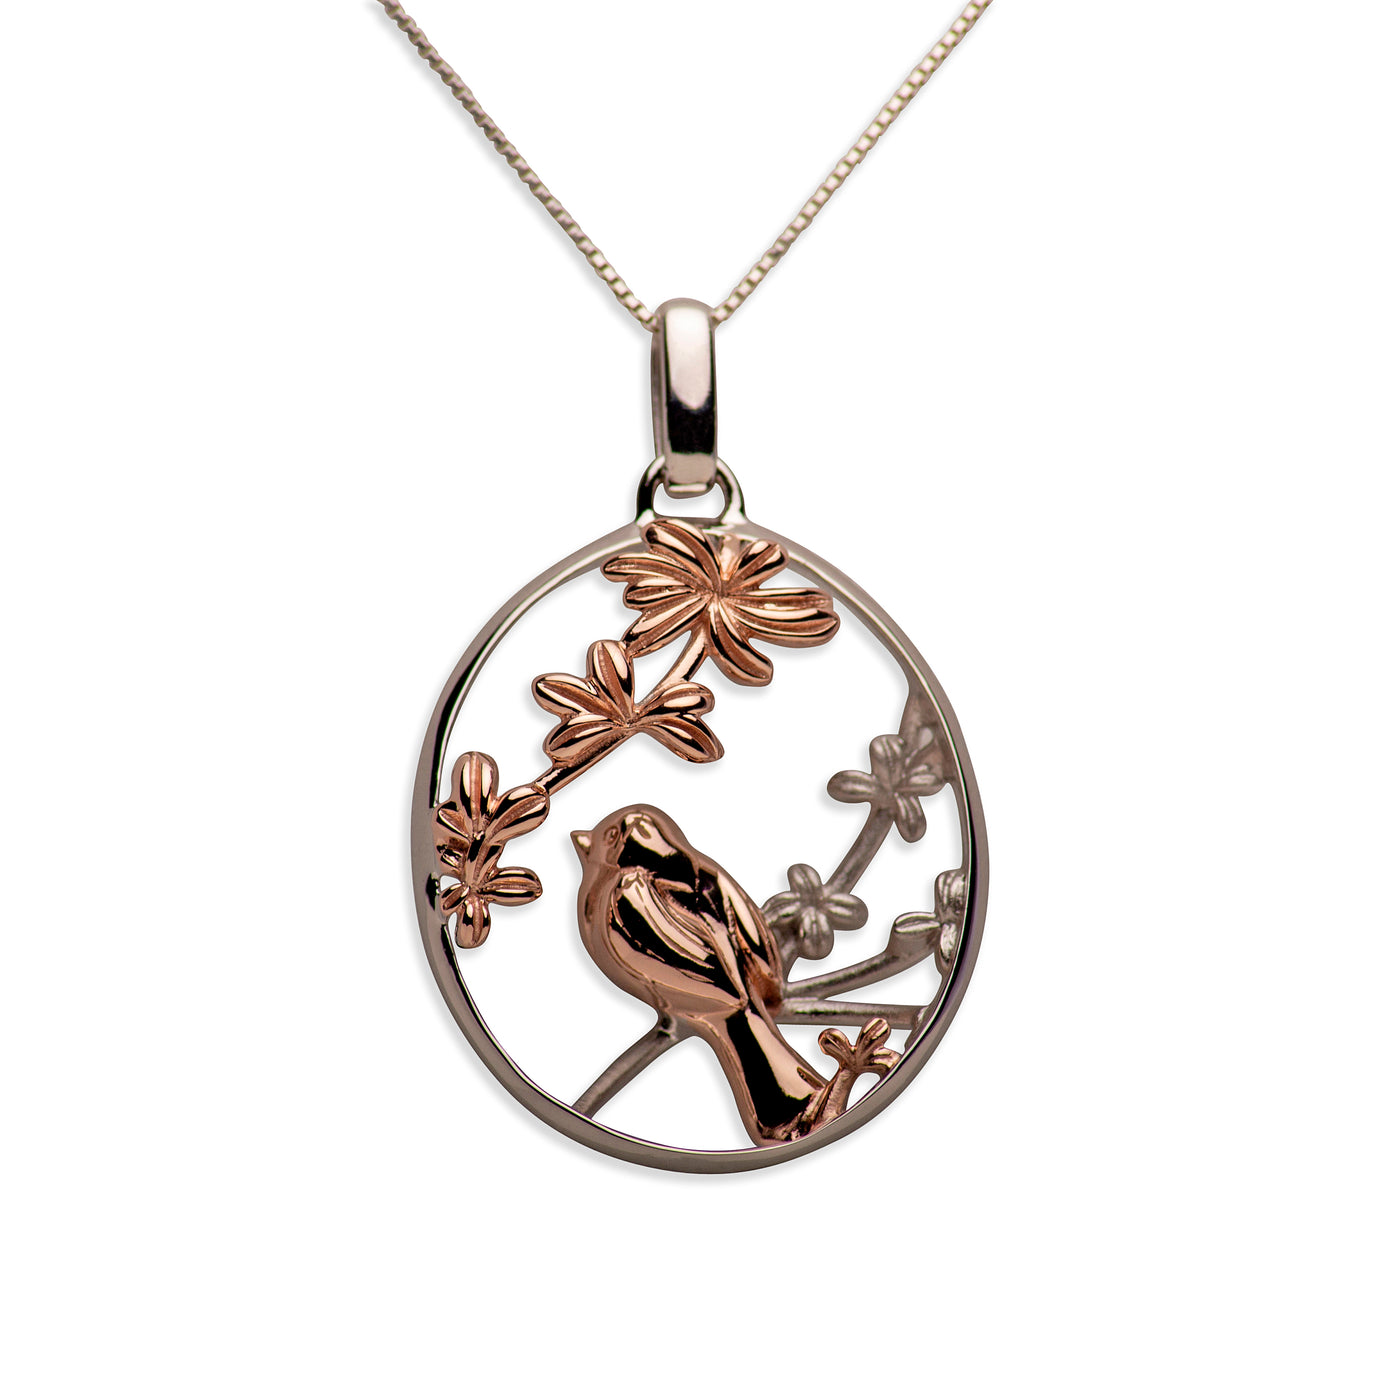 14K Rose Gold Plated Sterling Silver 3D Flower & Bird Pendant Necklace